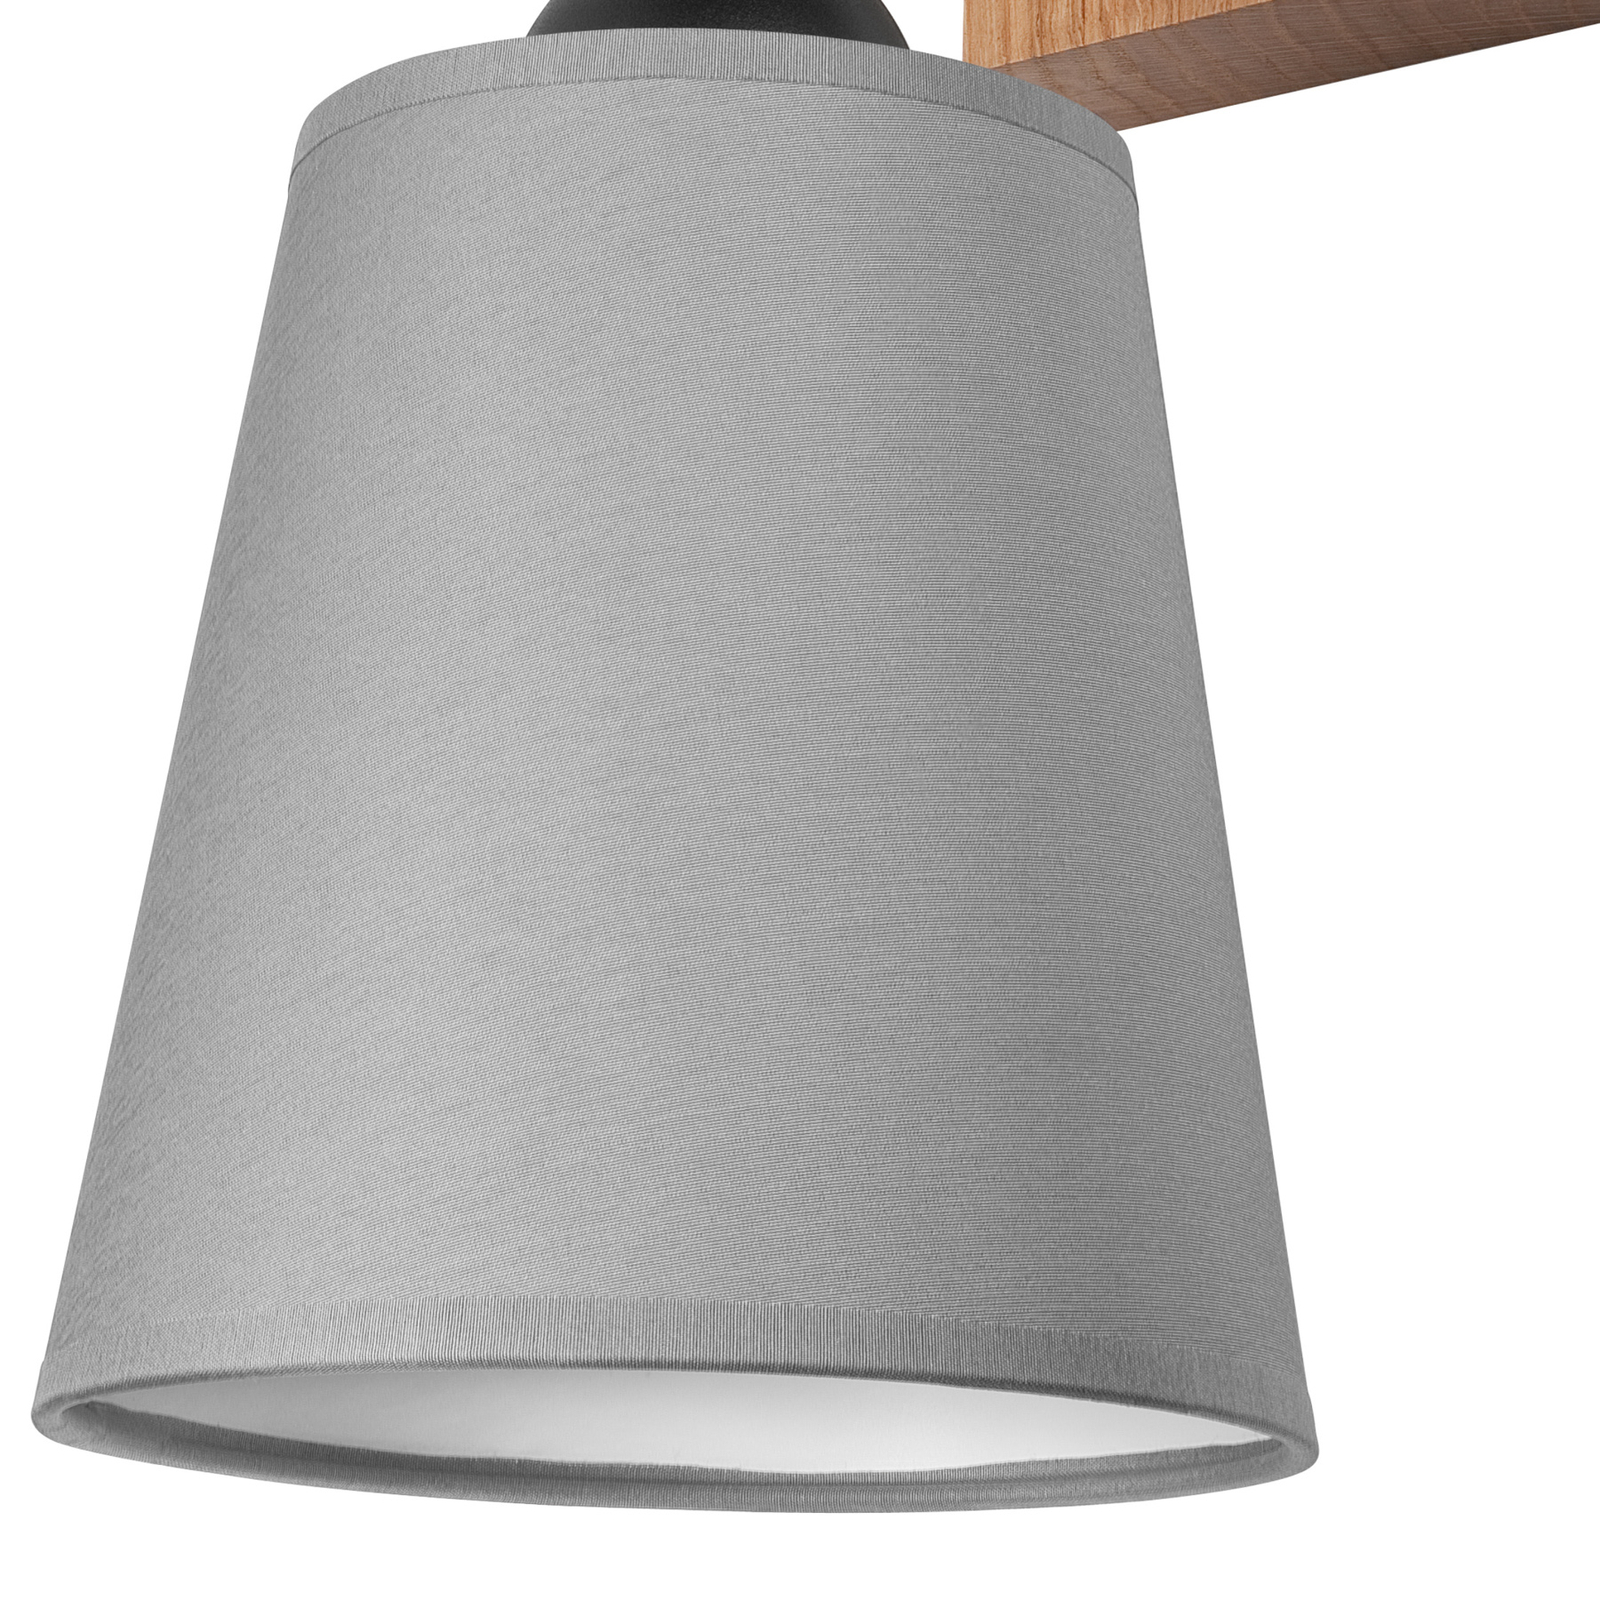 Envostar Risco wall light 1-bulb fabric shade grey